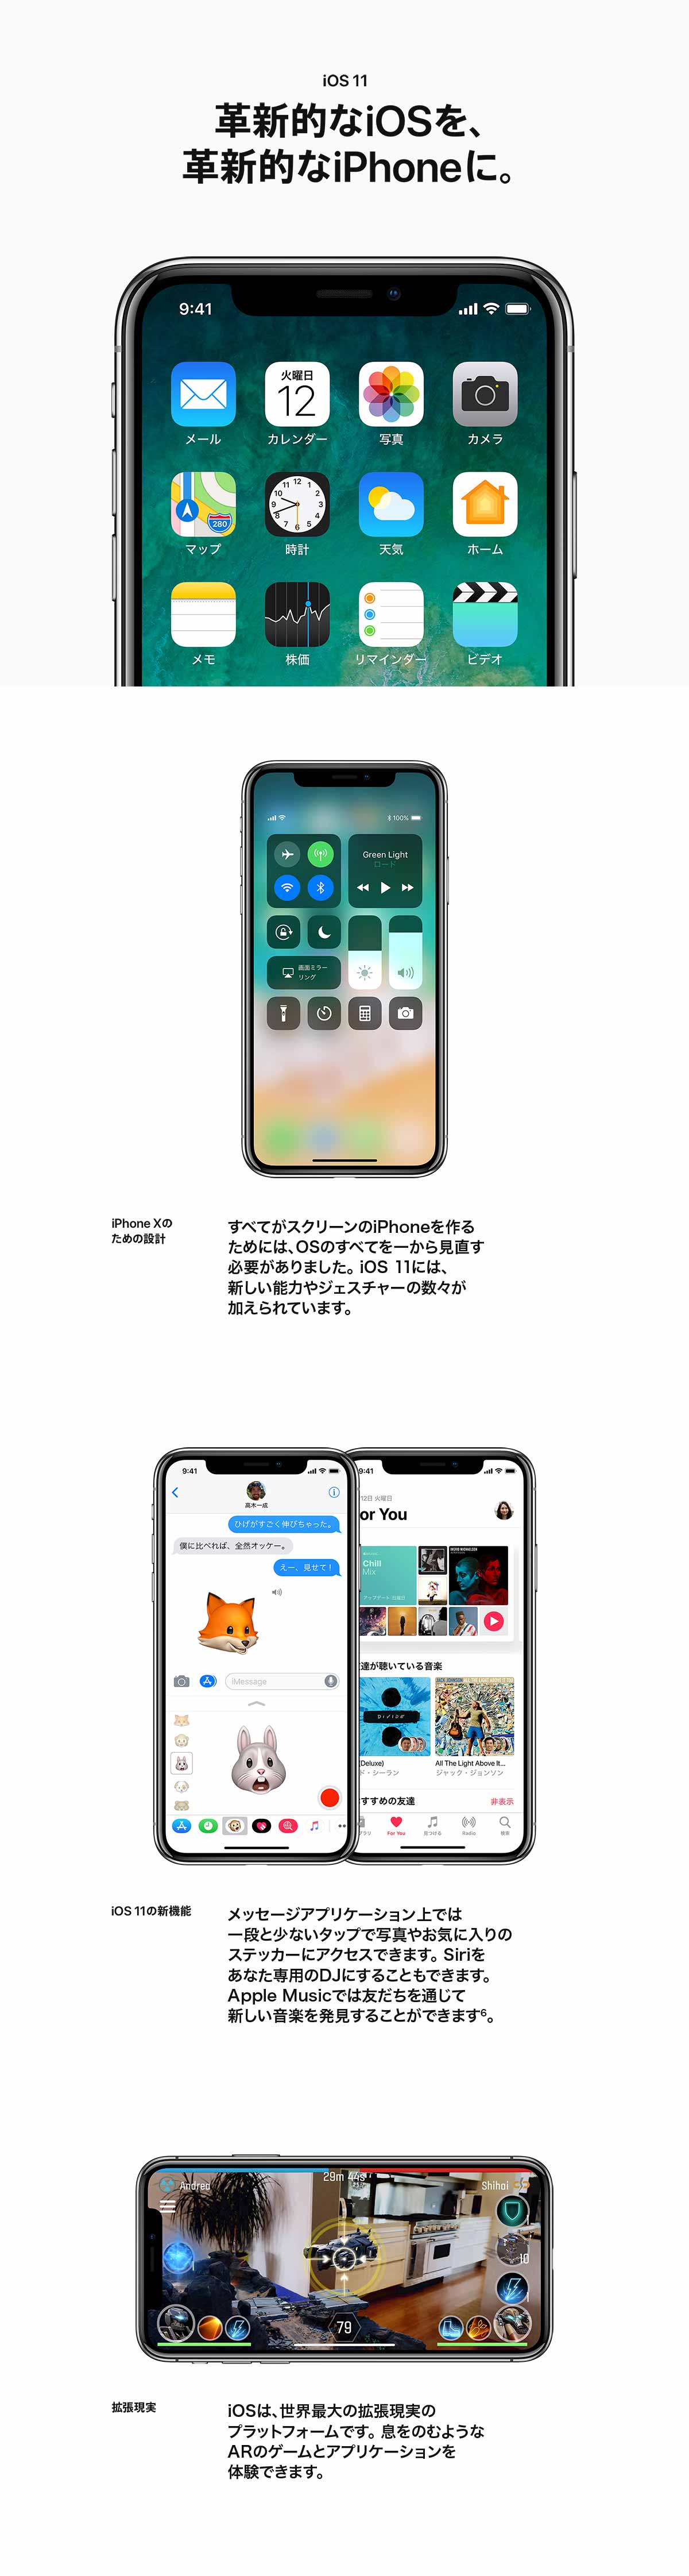 iOS11 - vVIiOSvVIiPhoneɁB